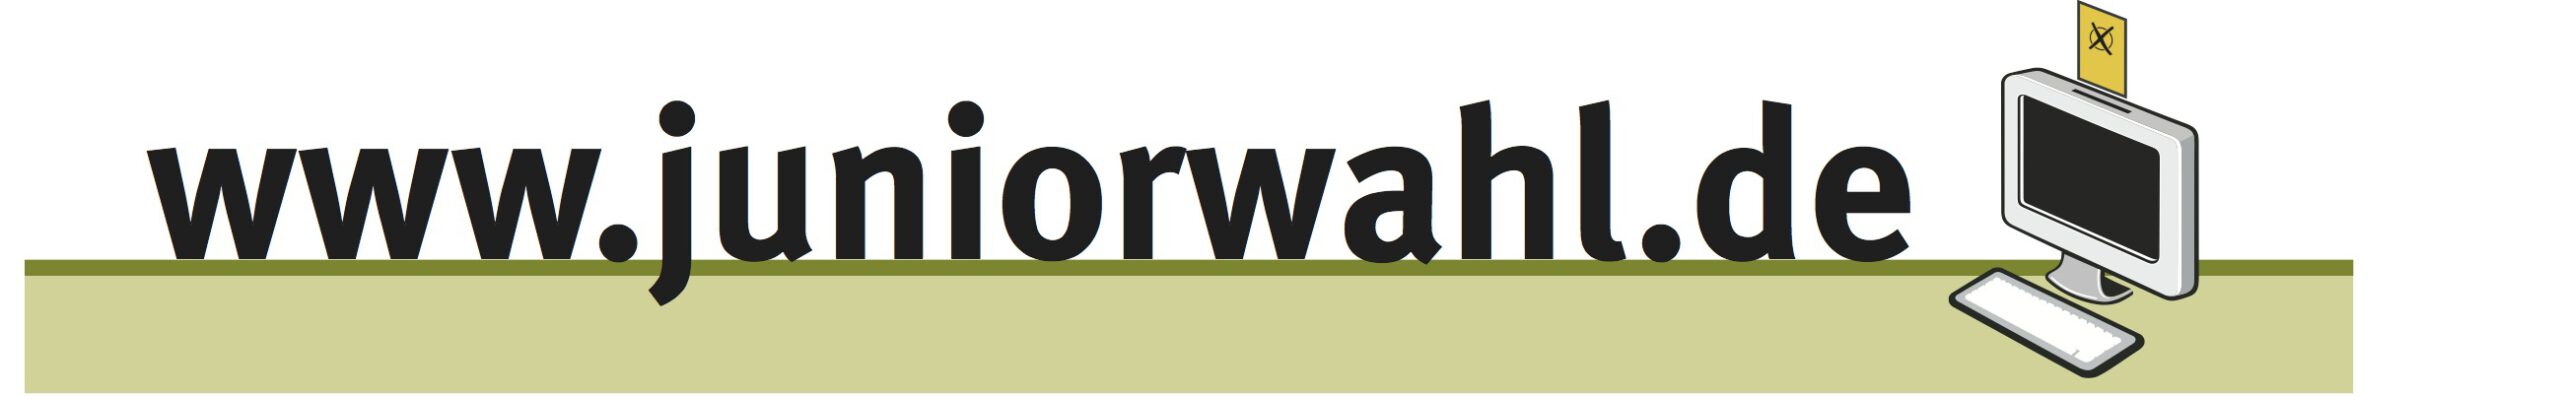 logo juniorwahl scaled